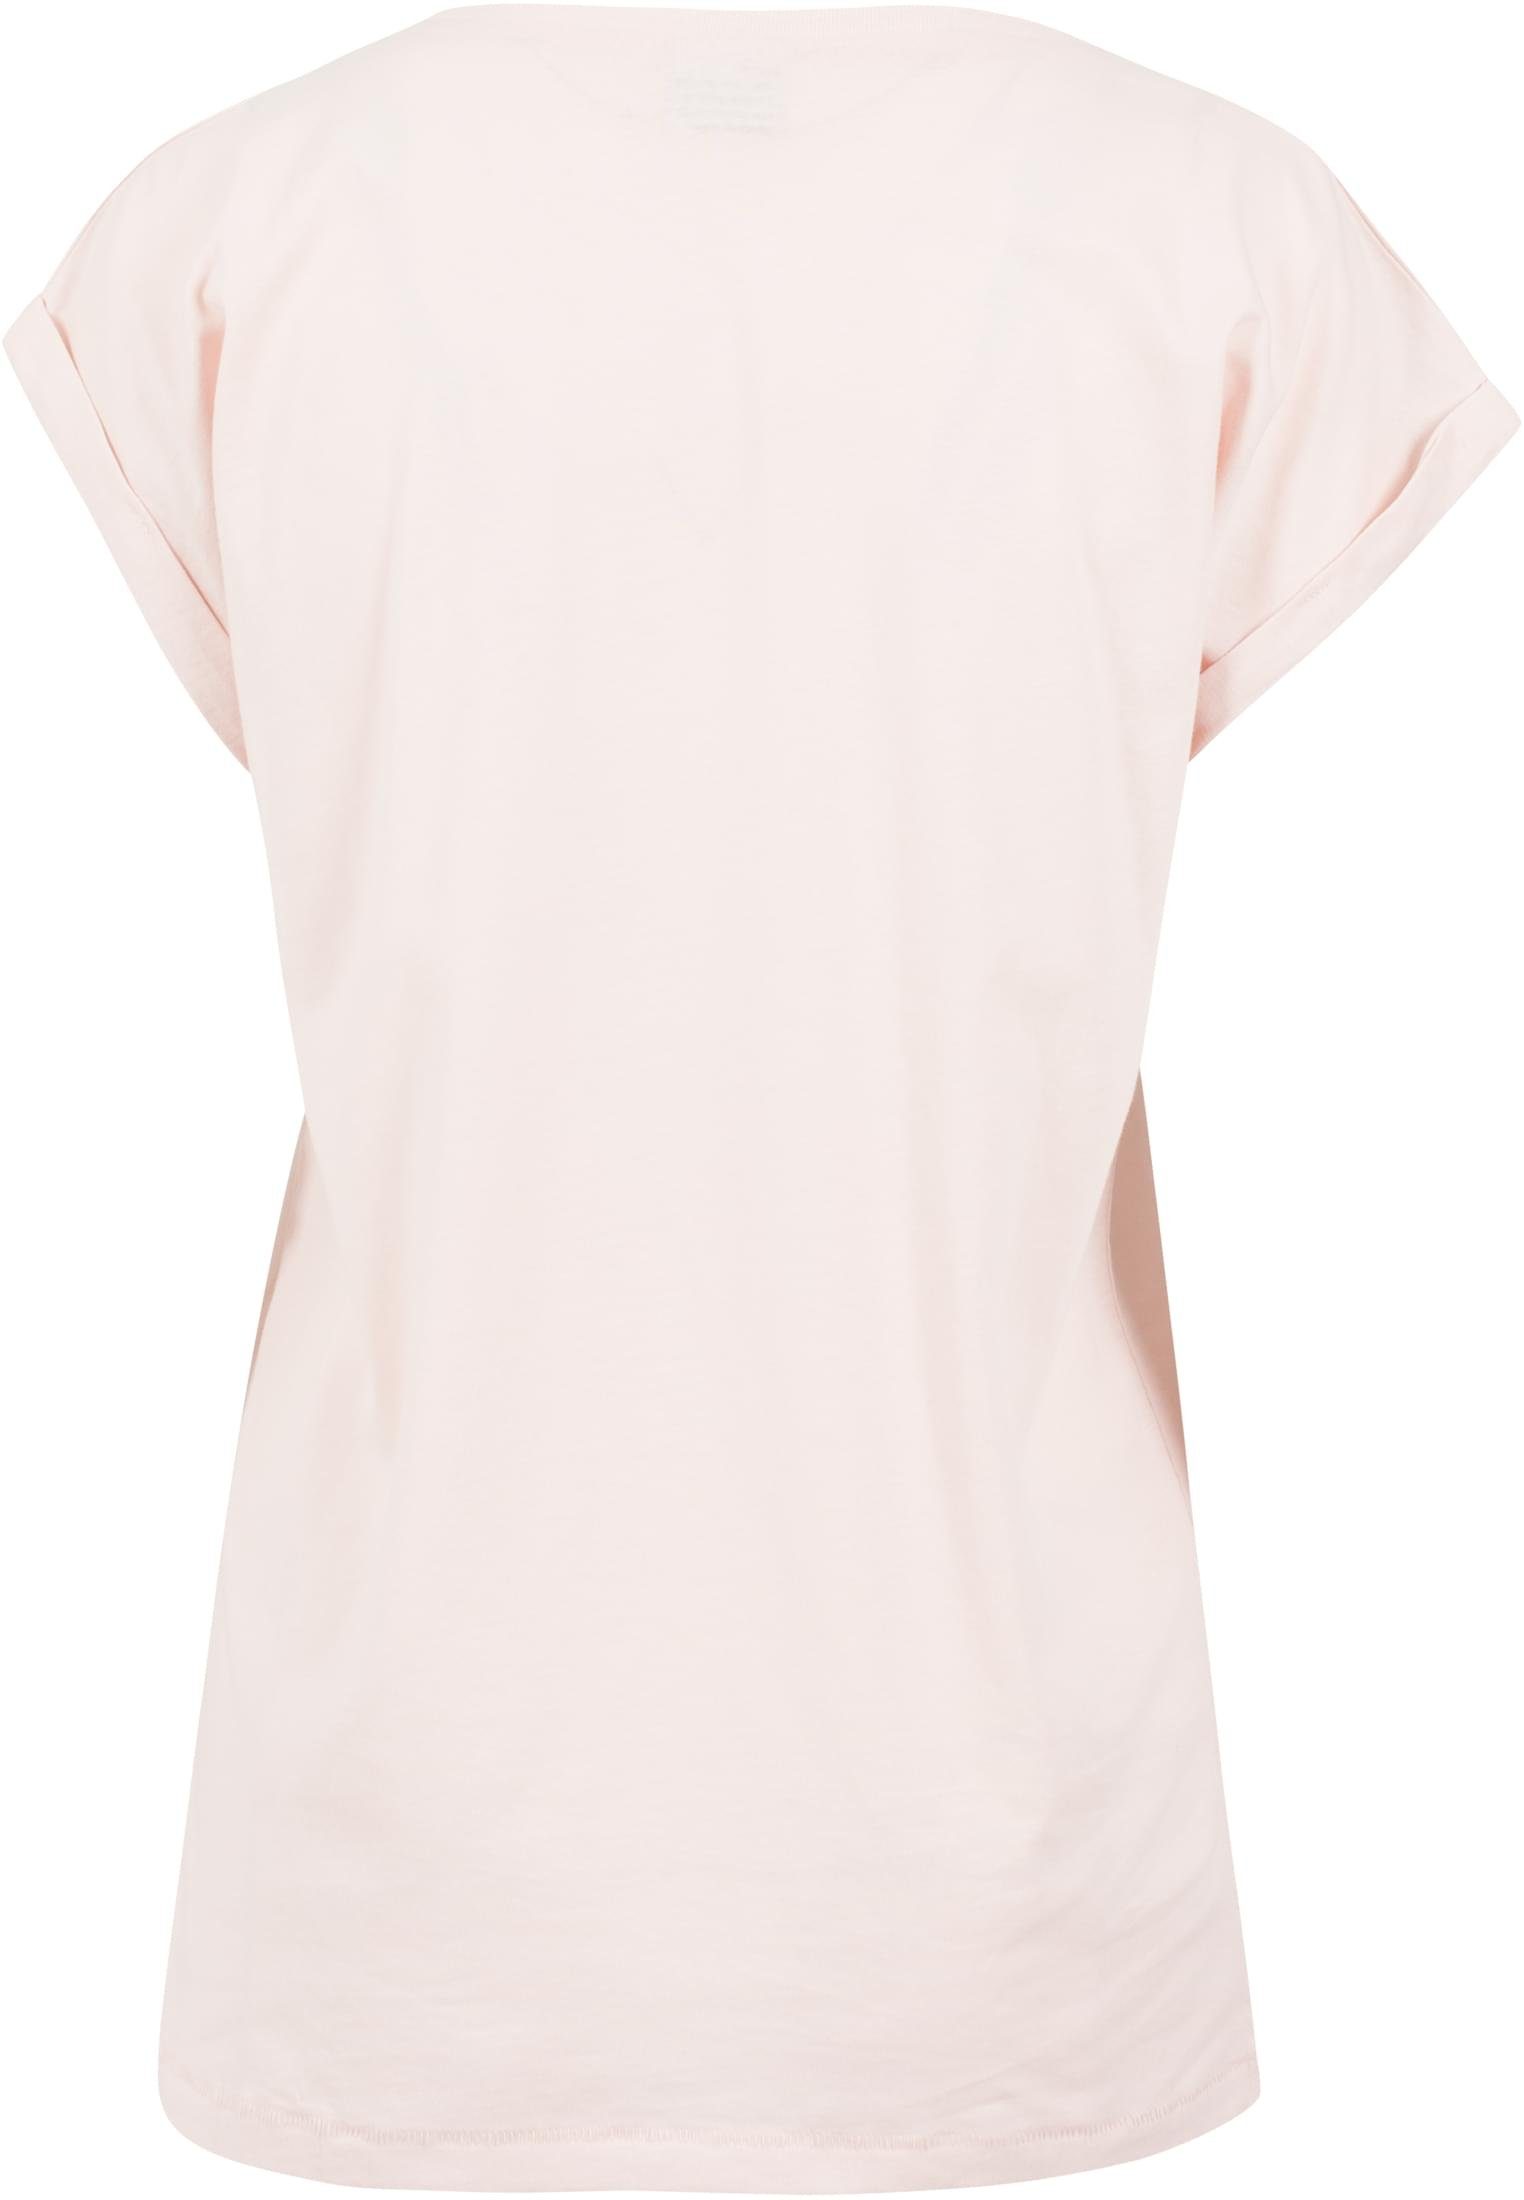 URBAN CLASSICS pink TB771 Extended Shoulder T-Shirt